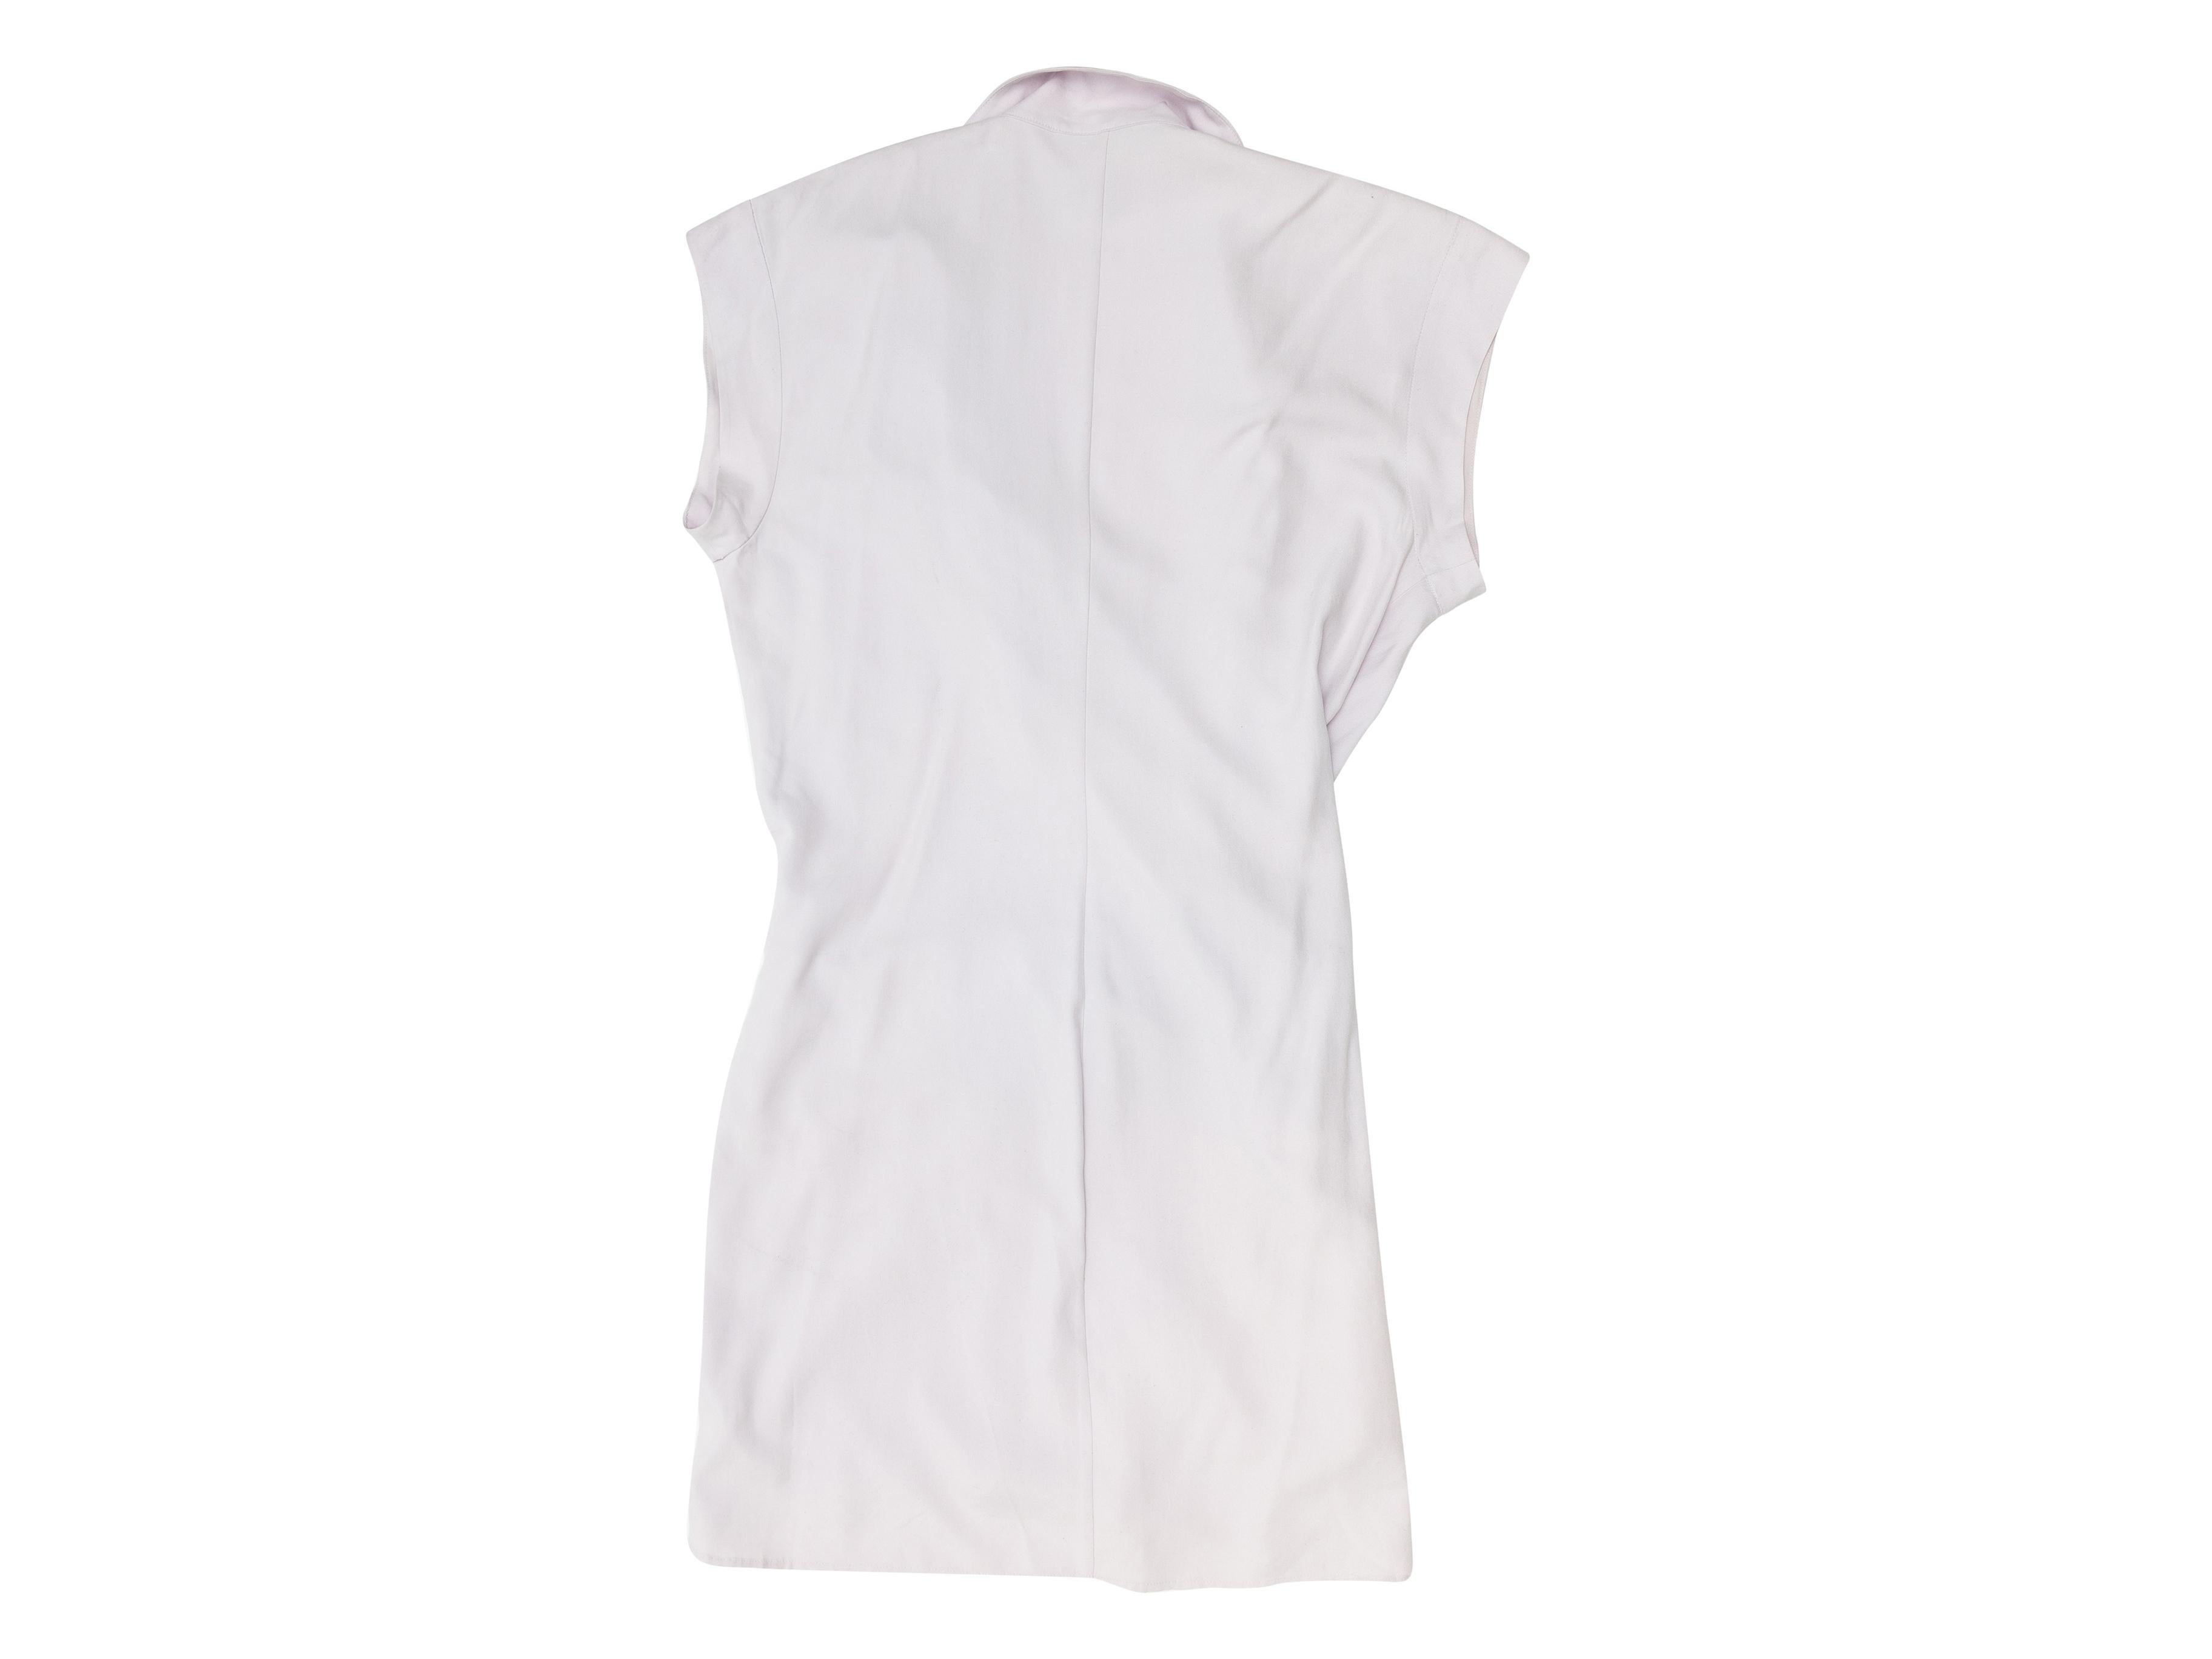 Product details: Lavender silk mini dress by Halston Heritage. Surplice neckline. Short sleeves. 34